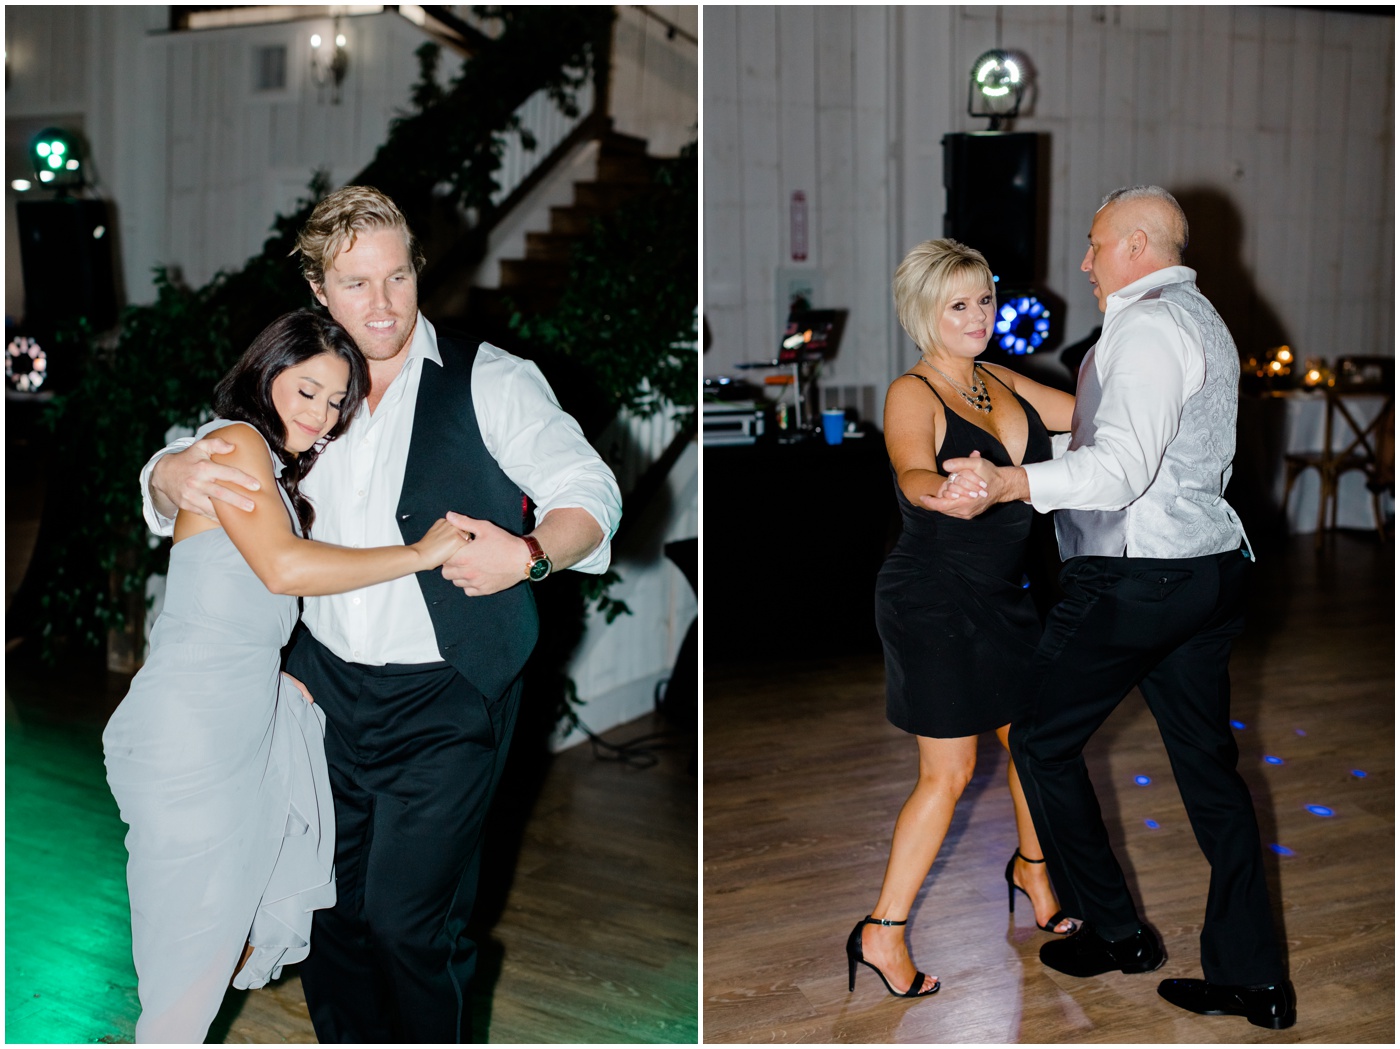 wedding guests dance together